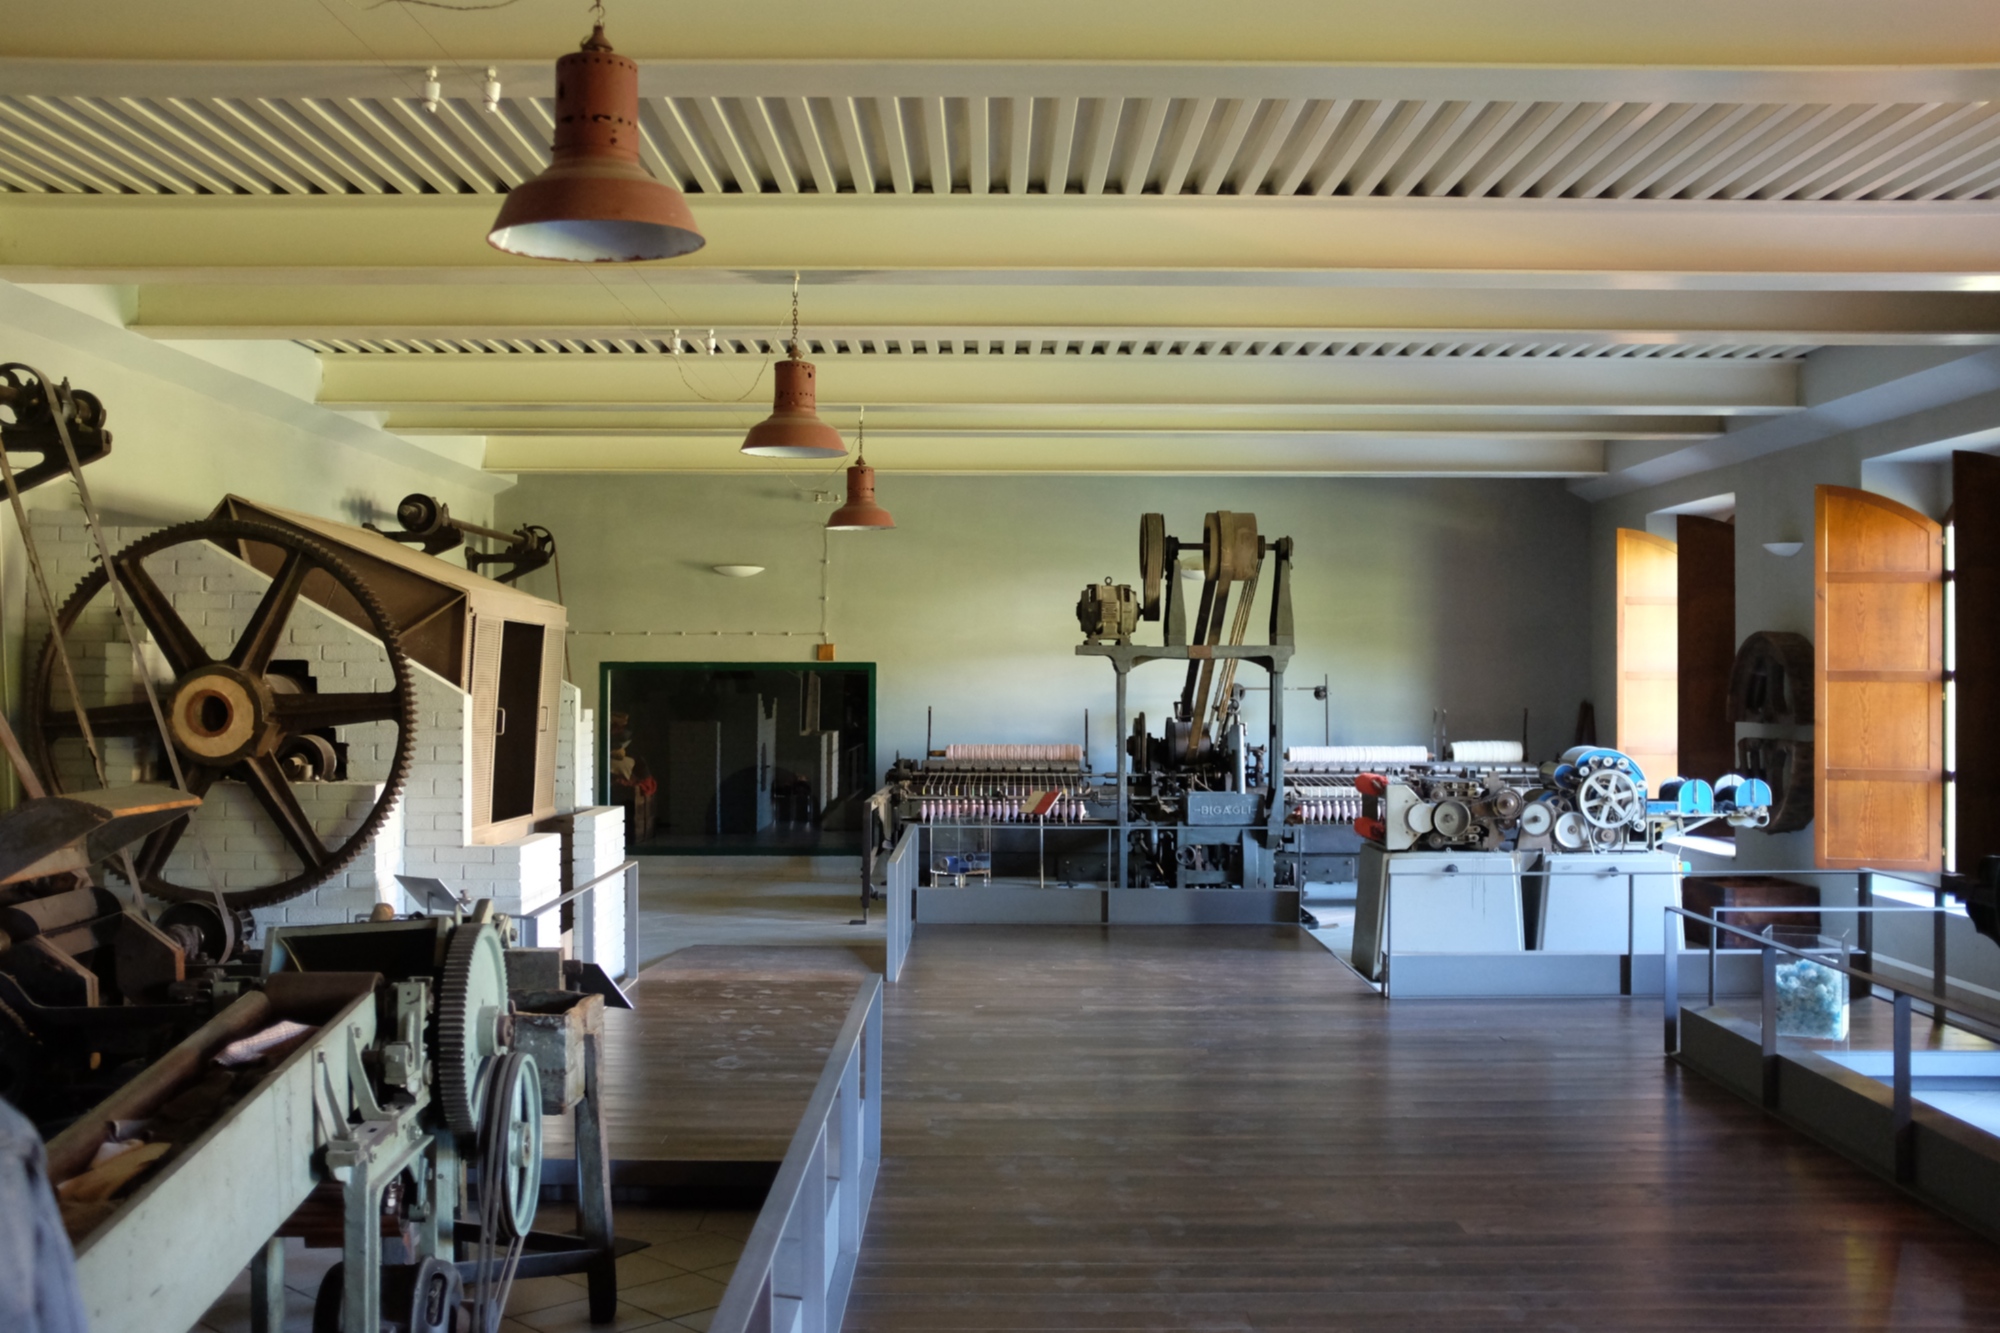 Textilmaschinenmuseum Mumat